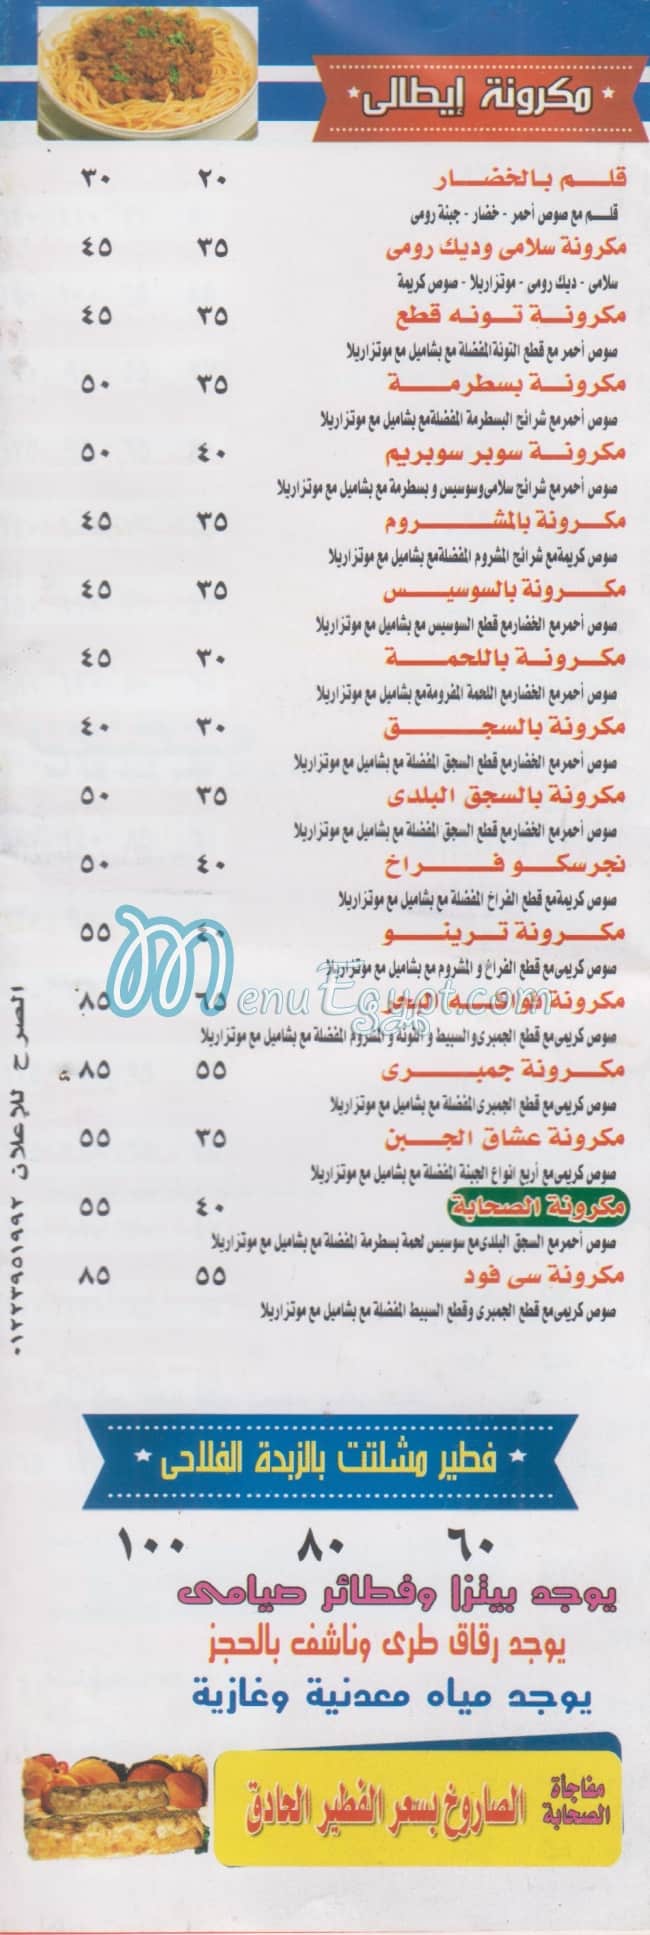 El Sahaba menu Egypt